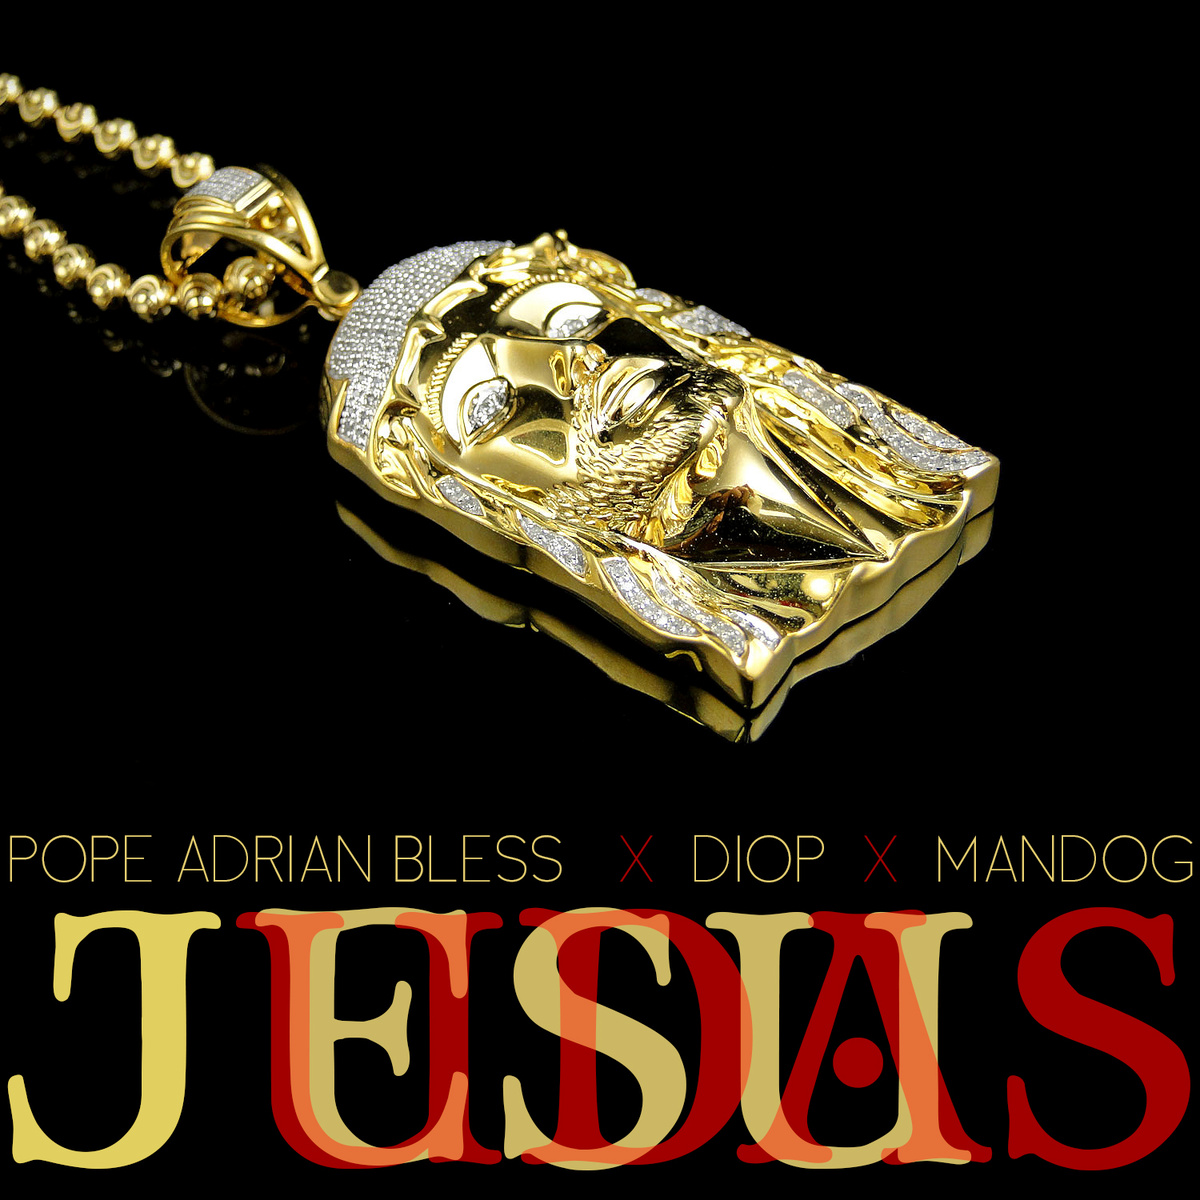 Mandog ft. Diop & Pope Adrian Bless "Jesus Judas" | @The_Mandog @AdrianBlessRWG @streeetshaman 